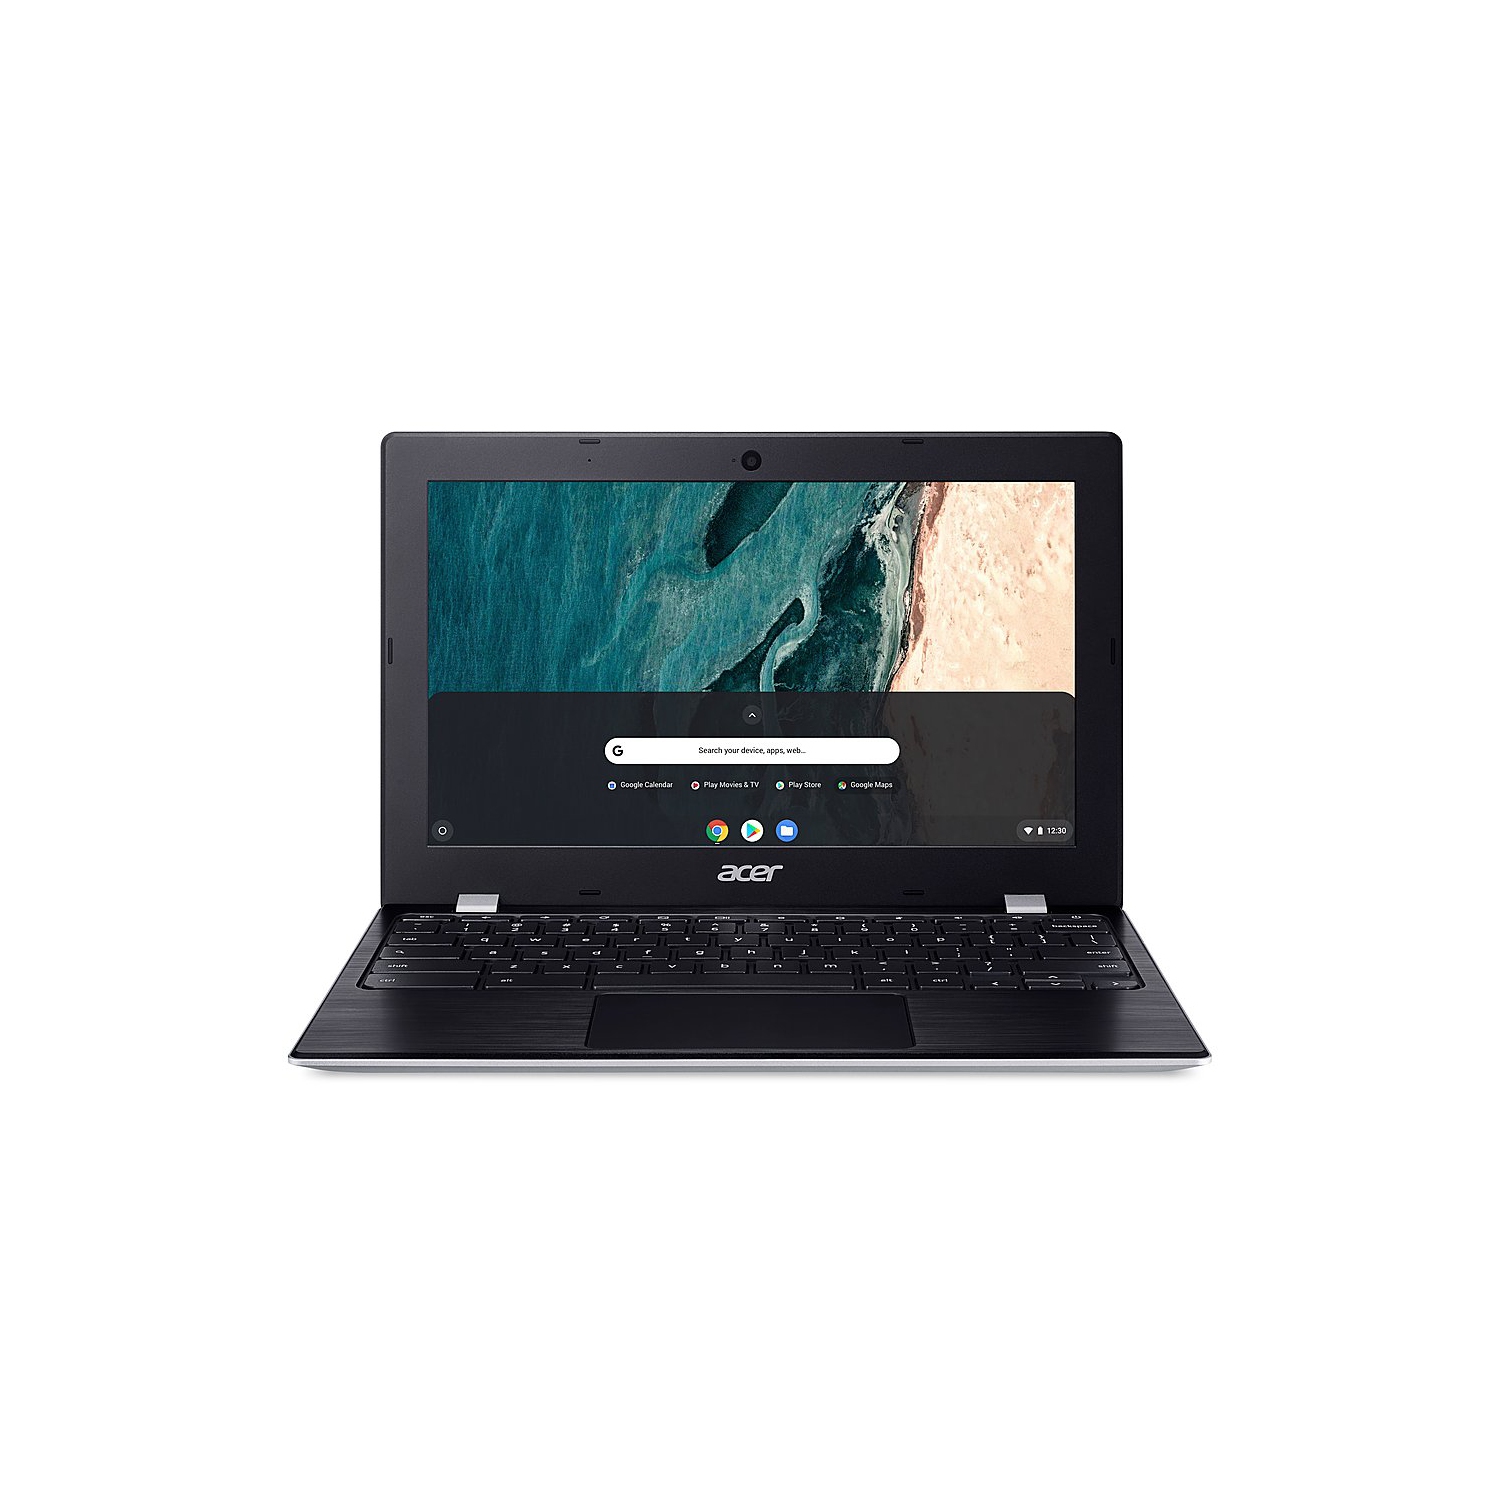 Refurbished (Excellent) - Acer Chromebook 311 - 11.6" MediaTek M8183C 2GHz 4GB Ram 32GB Flash Chrome OS